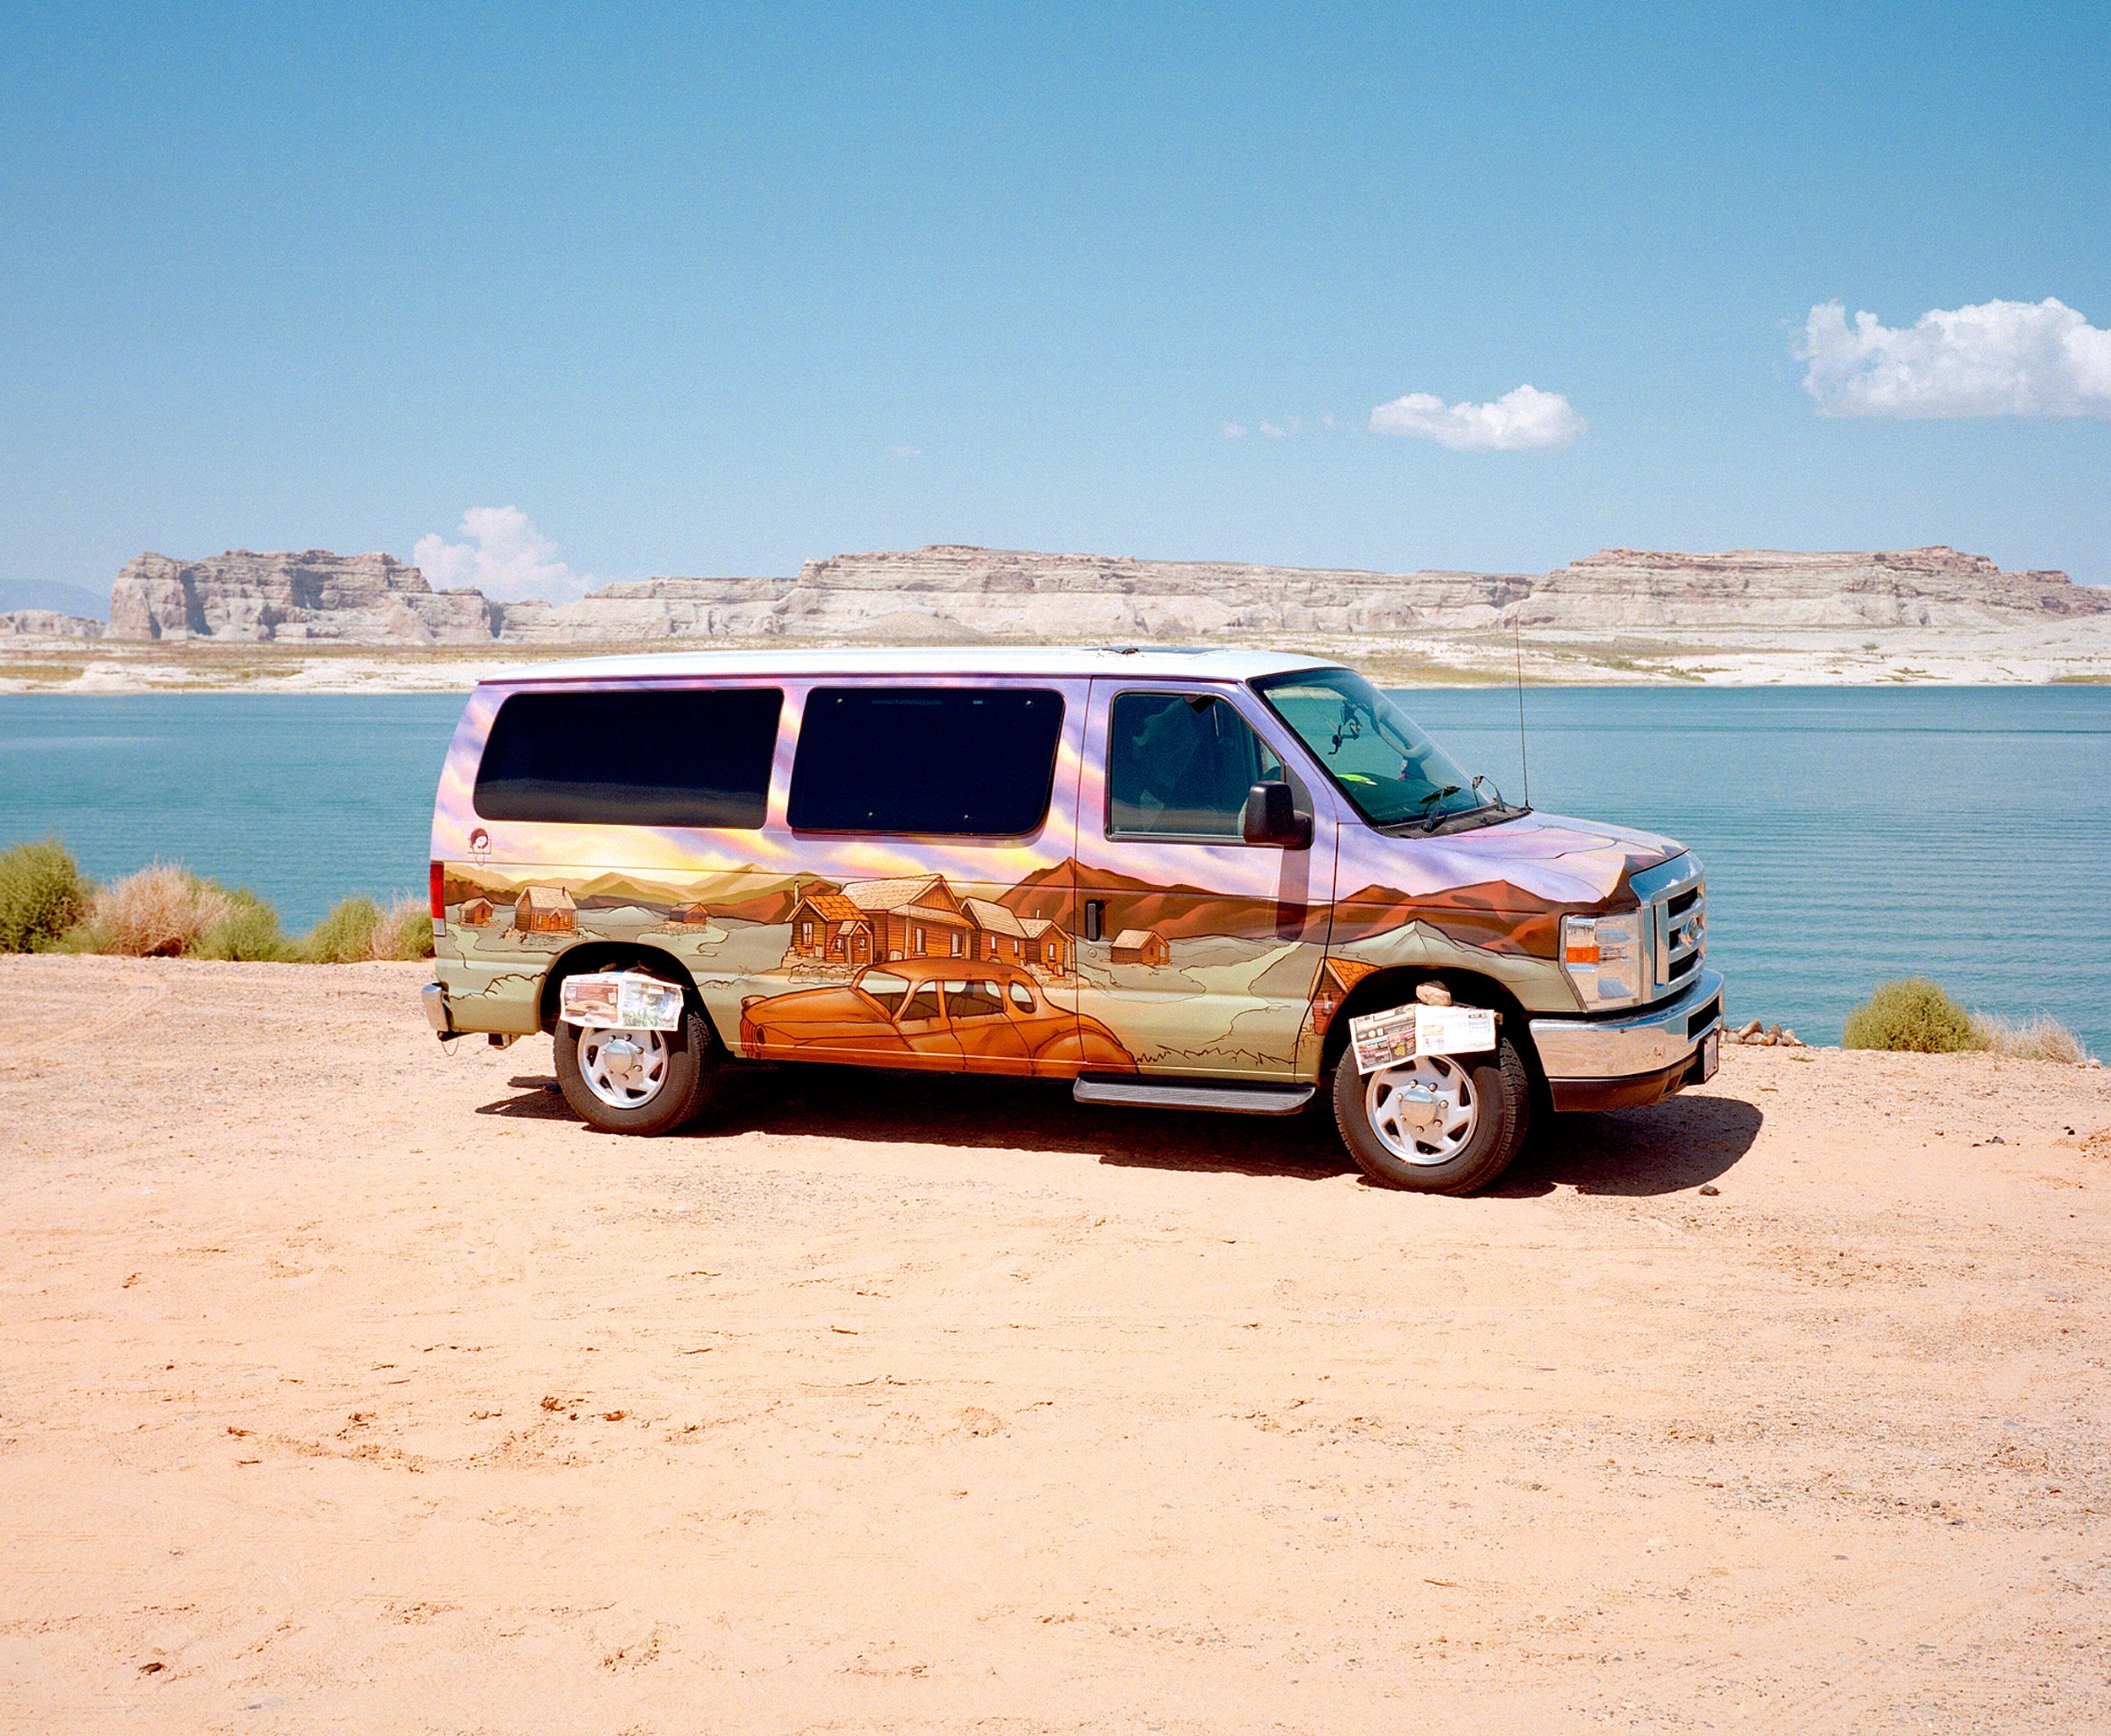  Van Matching The Landscape  Lake Powell 